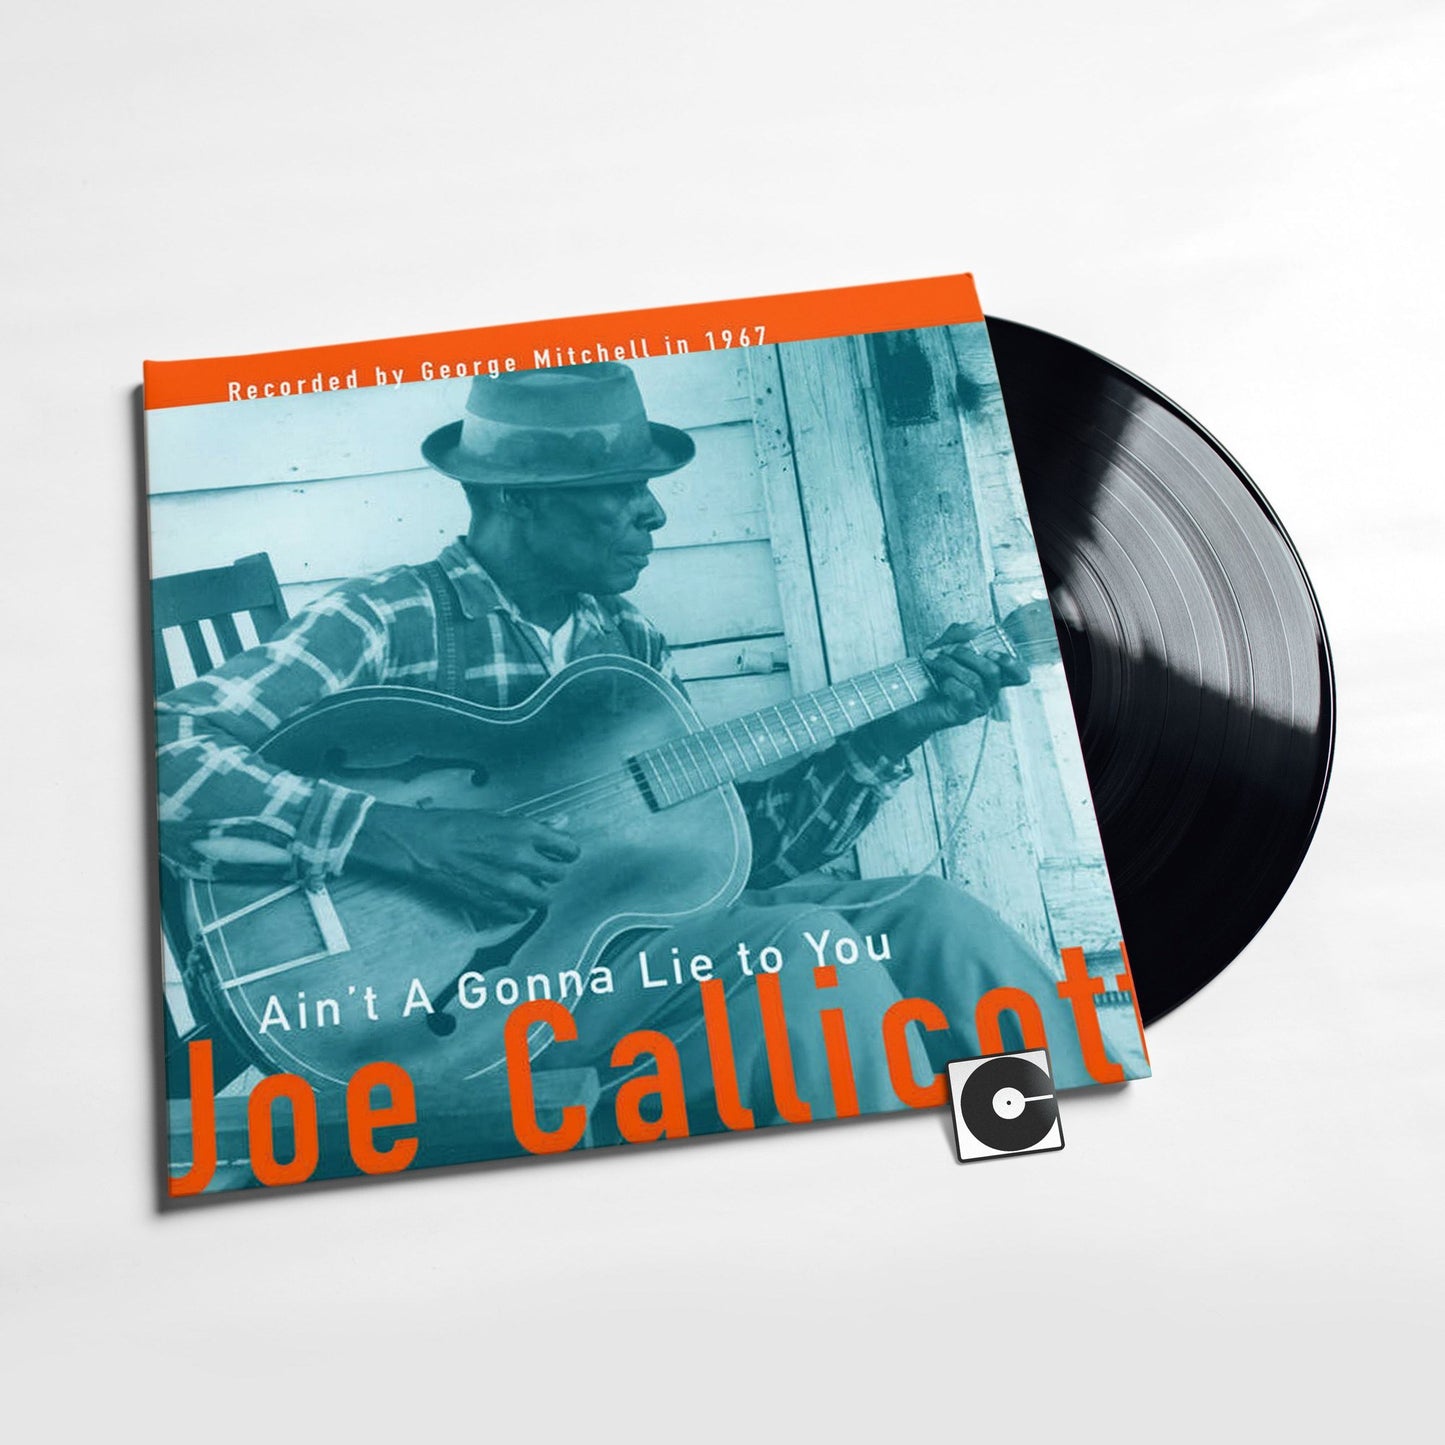 Joe Callicott - "Ain't Gonna Lie to You"